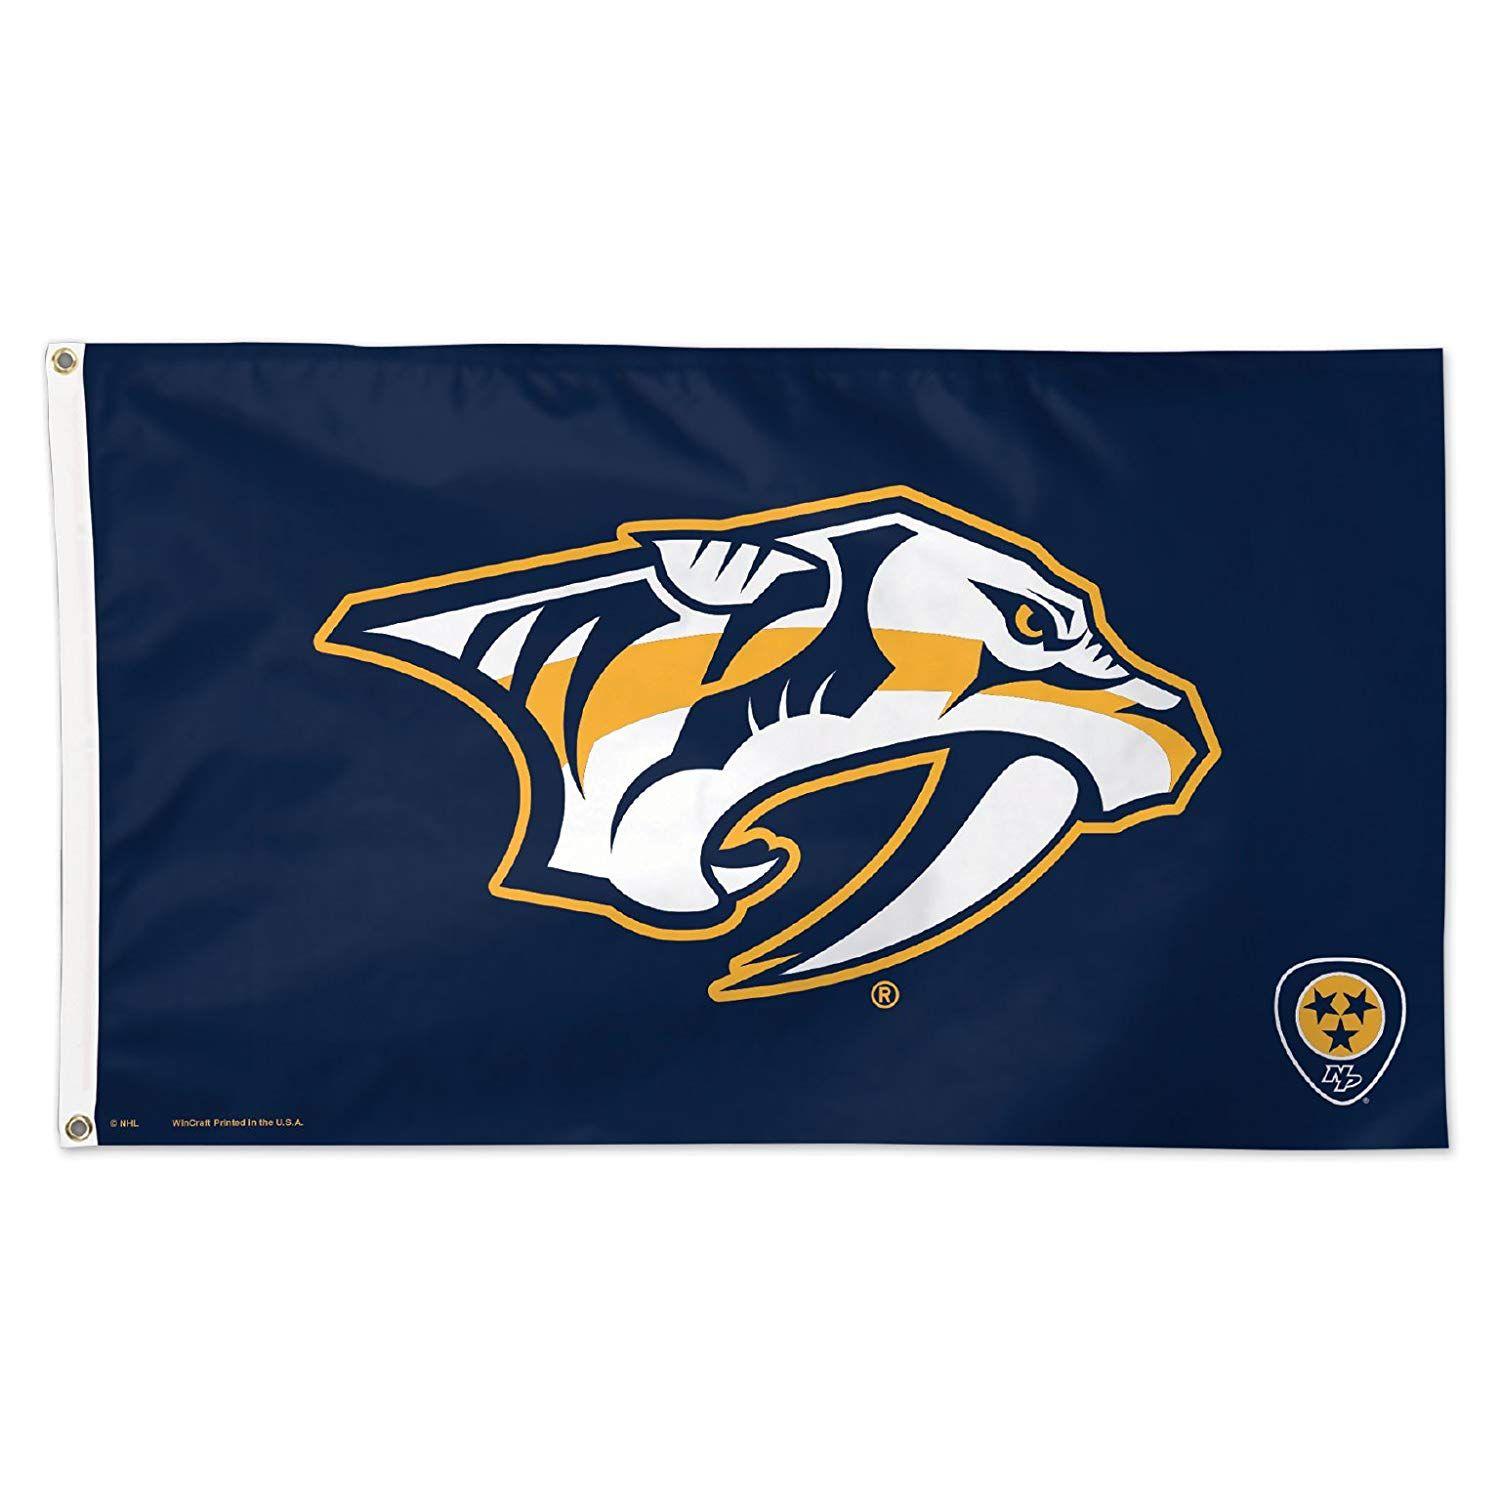 Preds Logo - Amazon.com : Wincraft Nashville Predators Blue 3x5 Foot NHL Flag ...